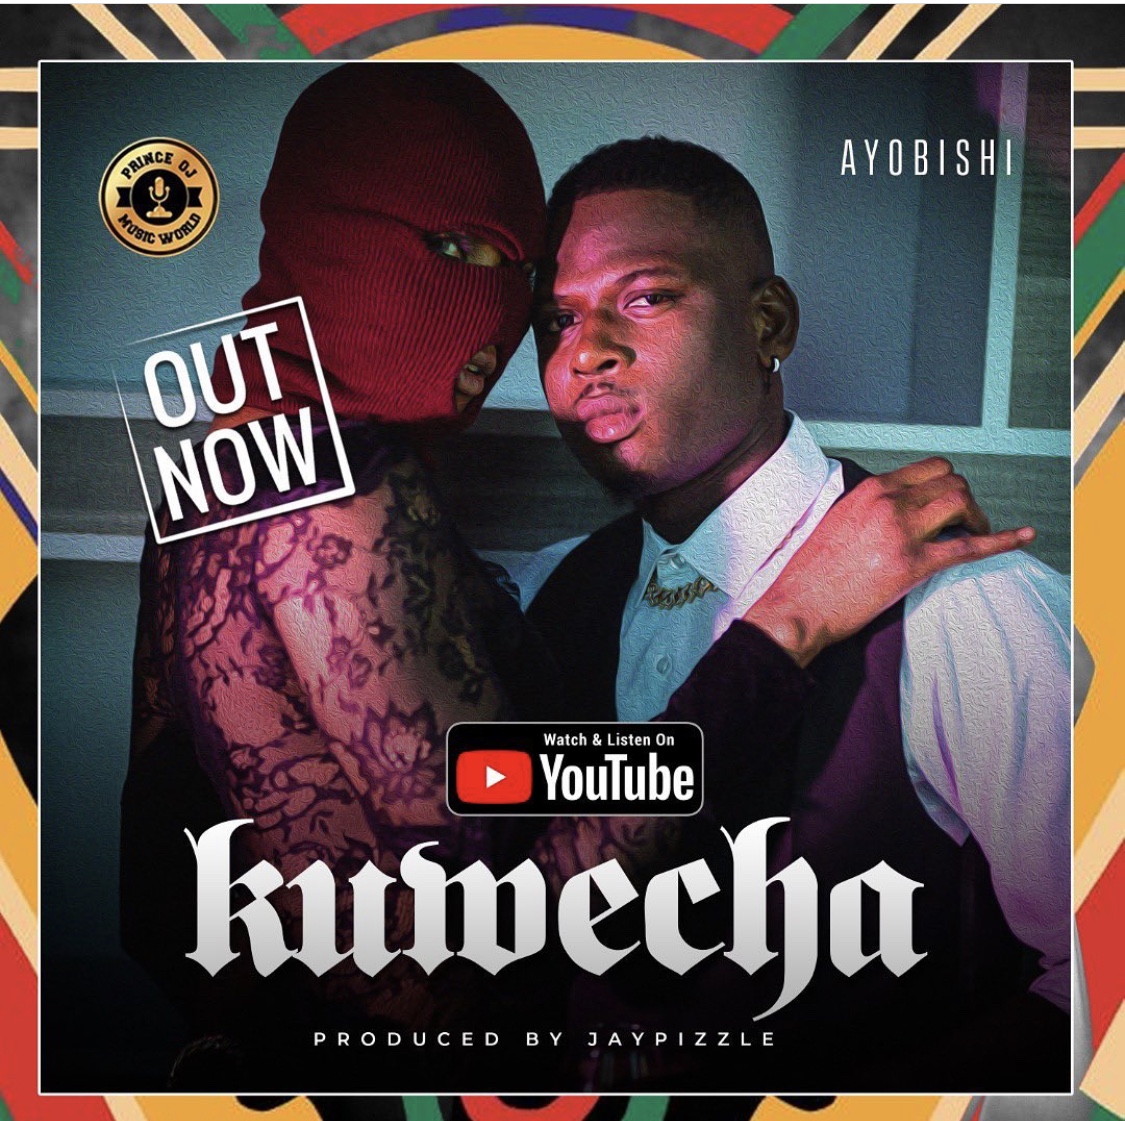 Ayo Bishi Resurfaces with visuals to new single “Kuwecha”